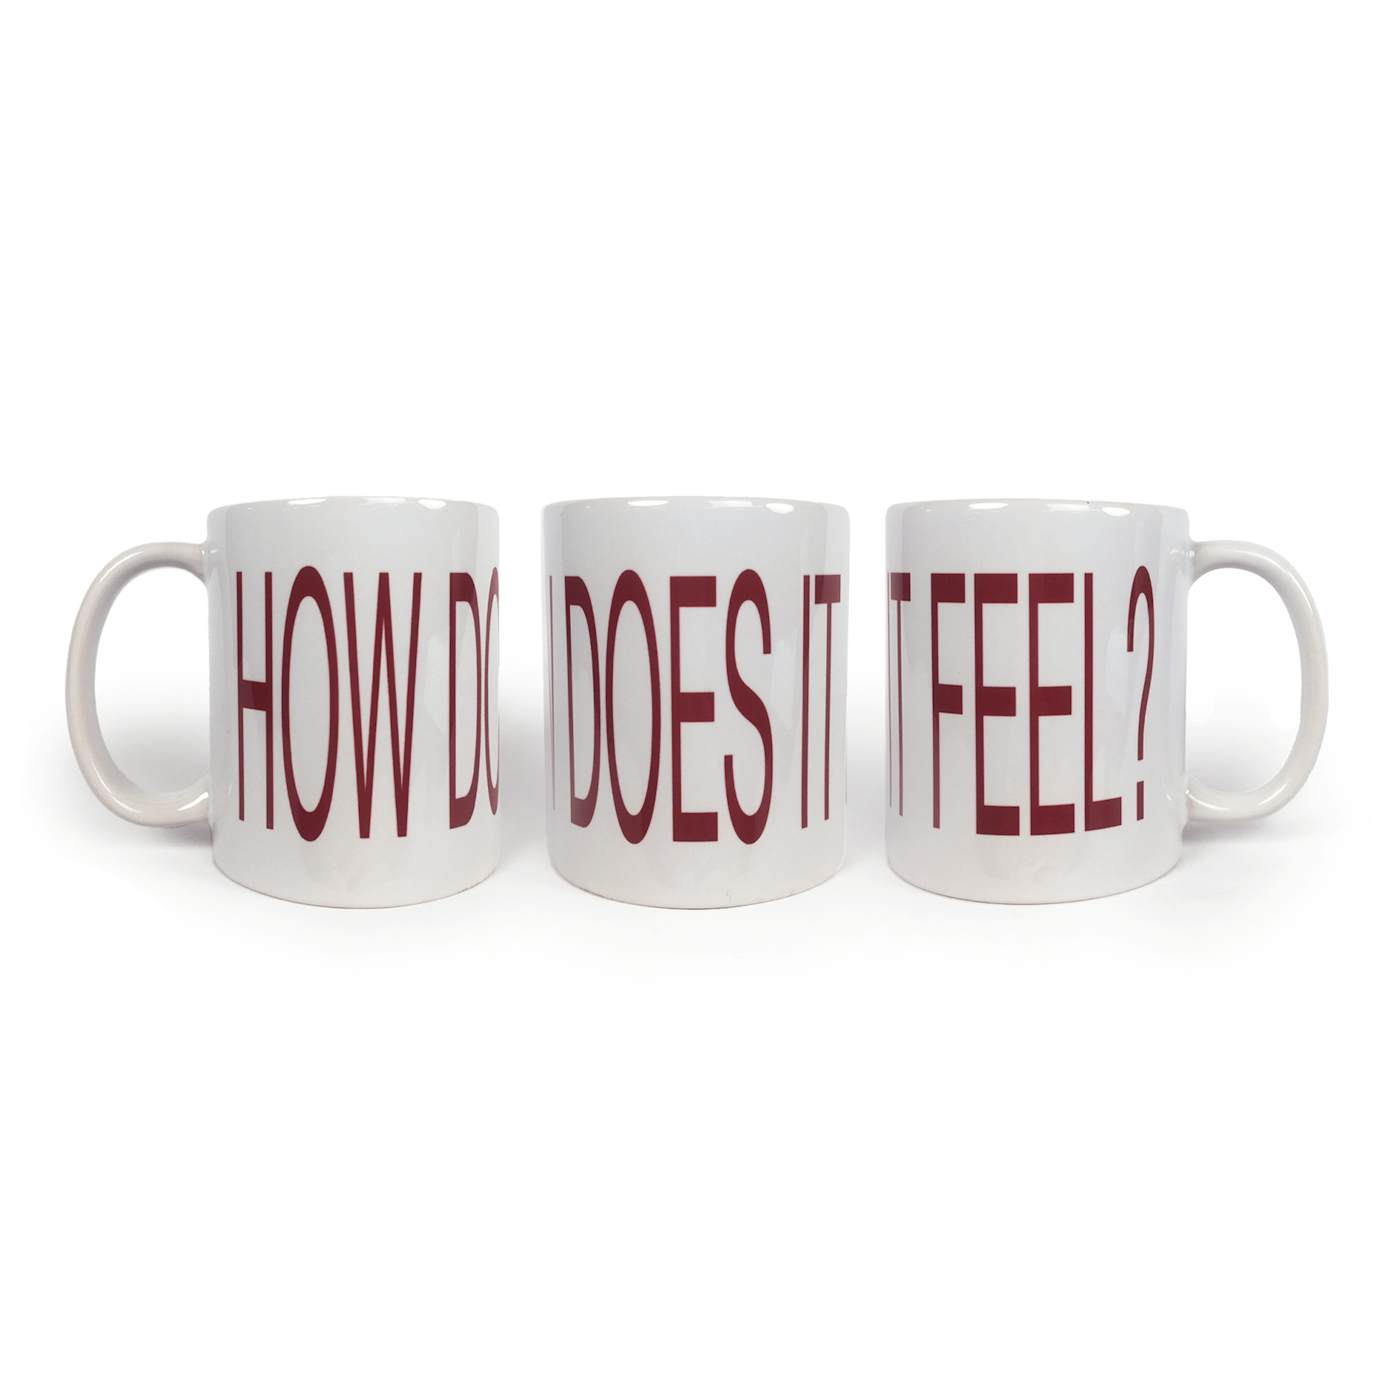 Donna Missal How Does It Feel? Mug